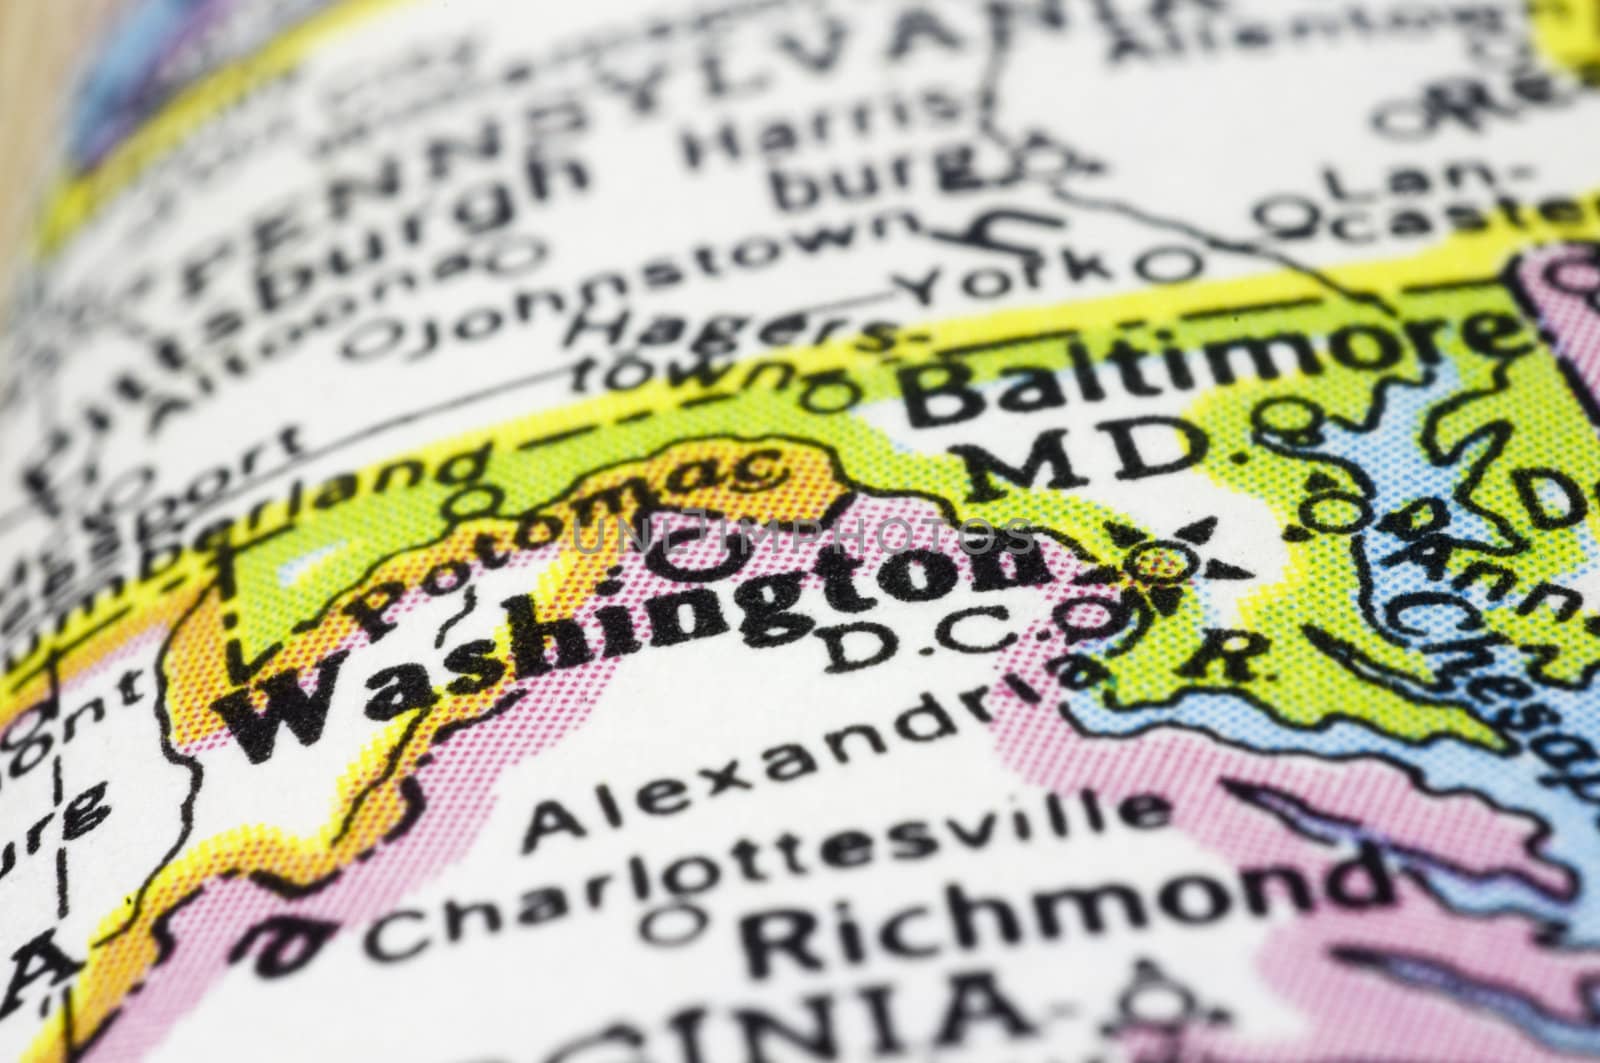 washington DC close up on map, shallow depth of field